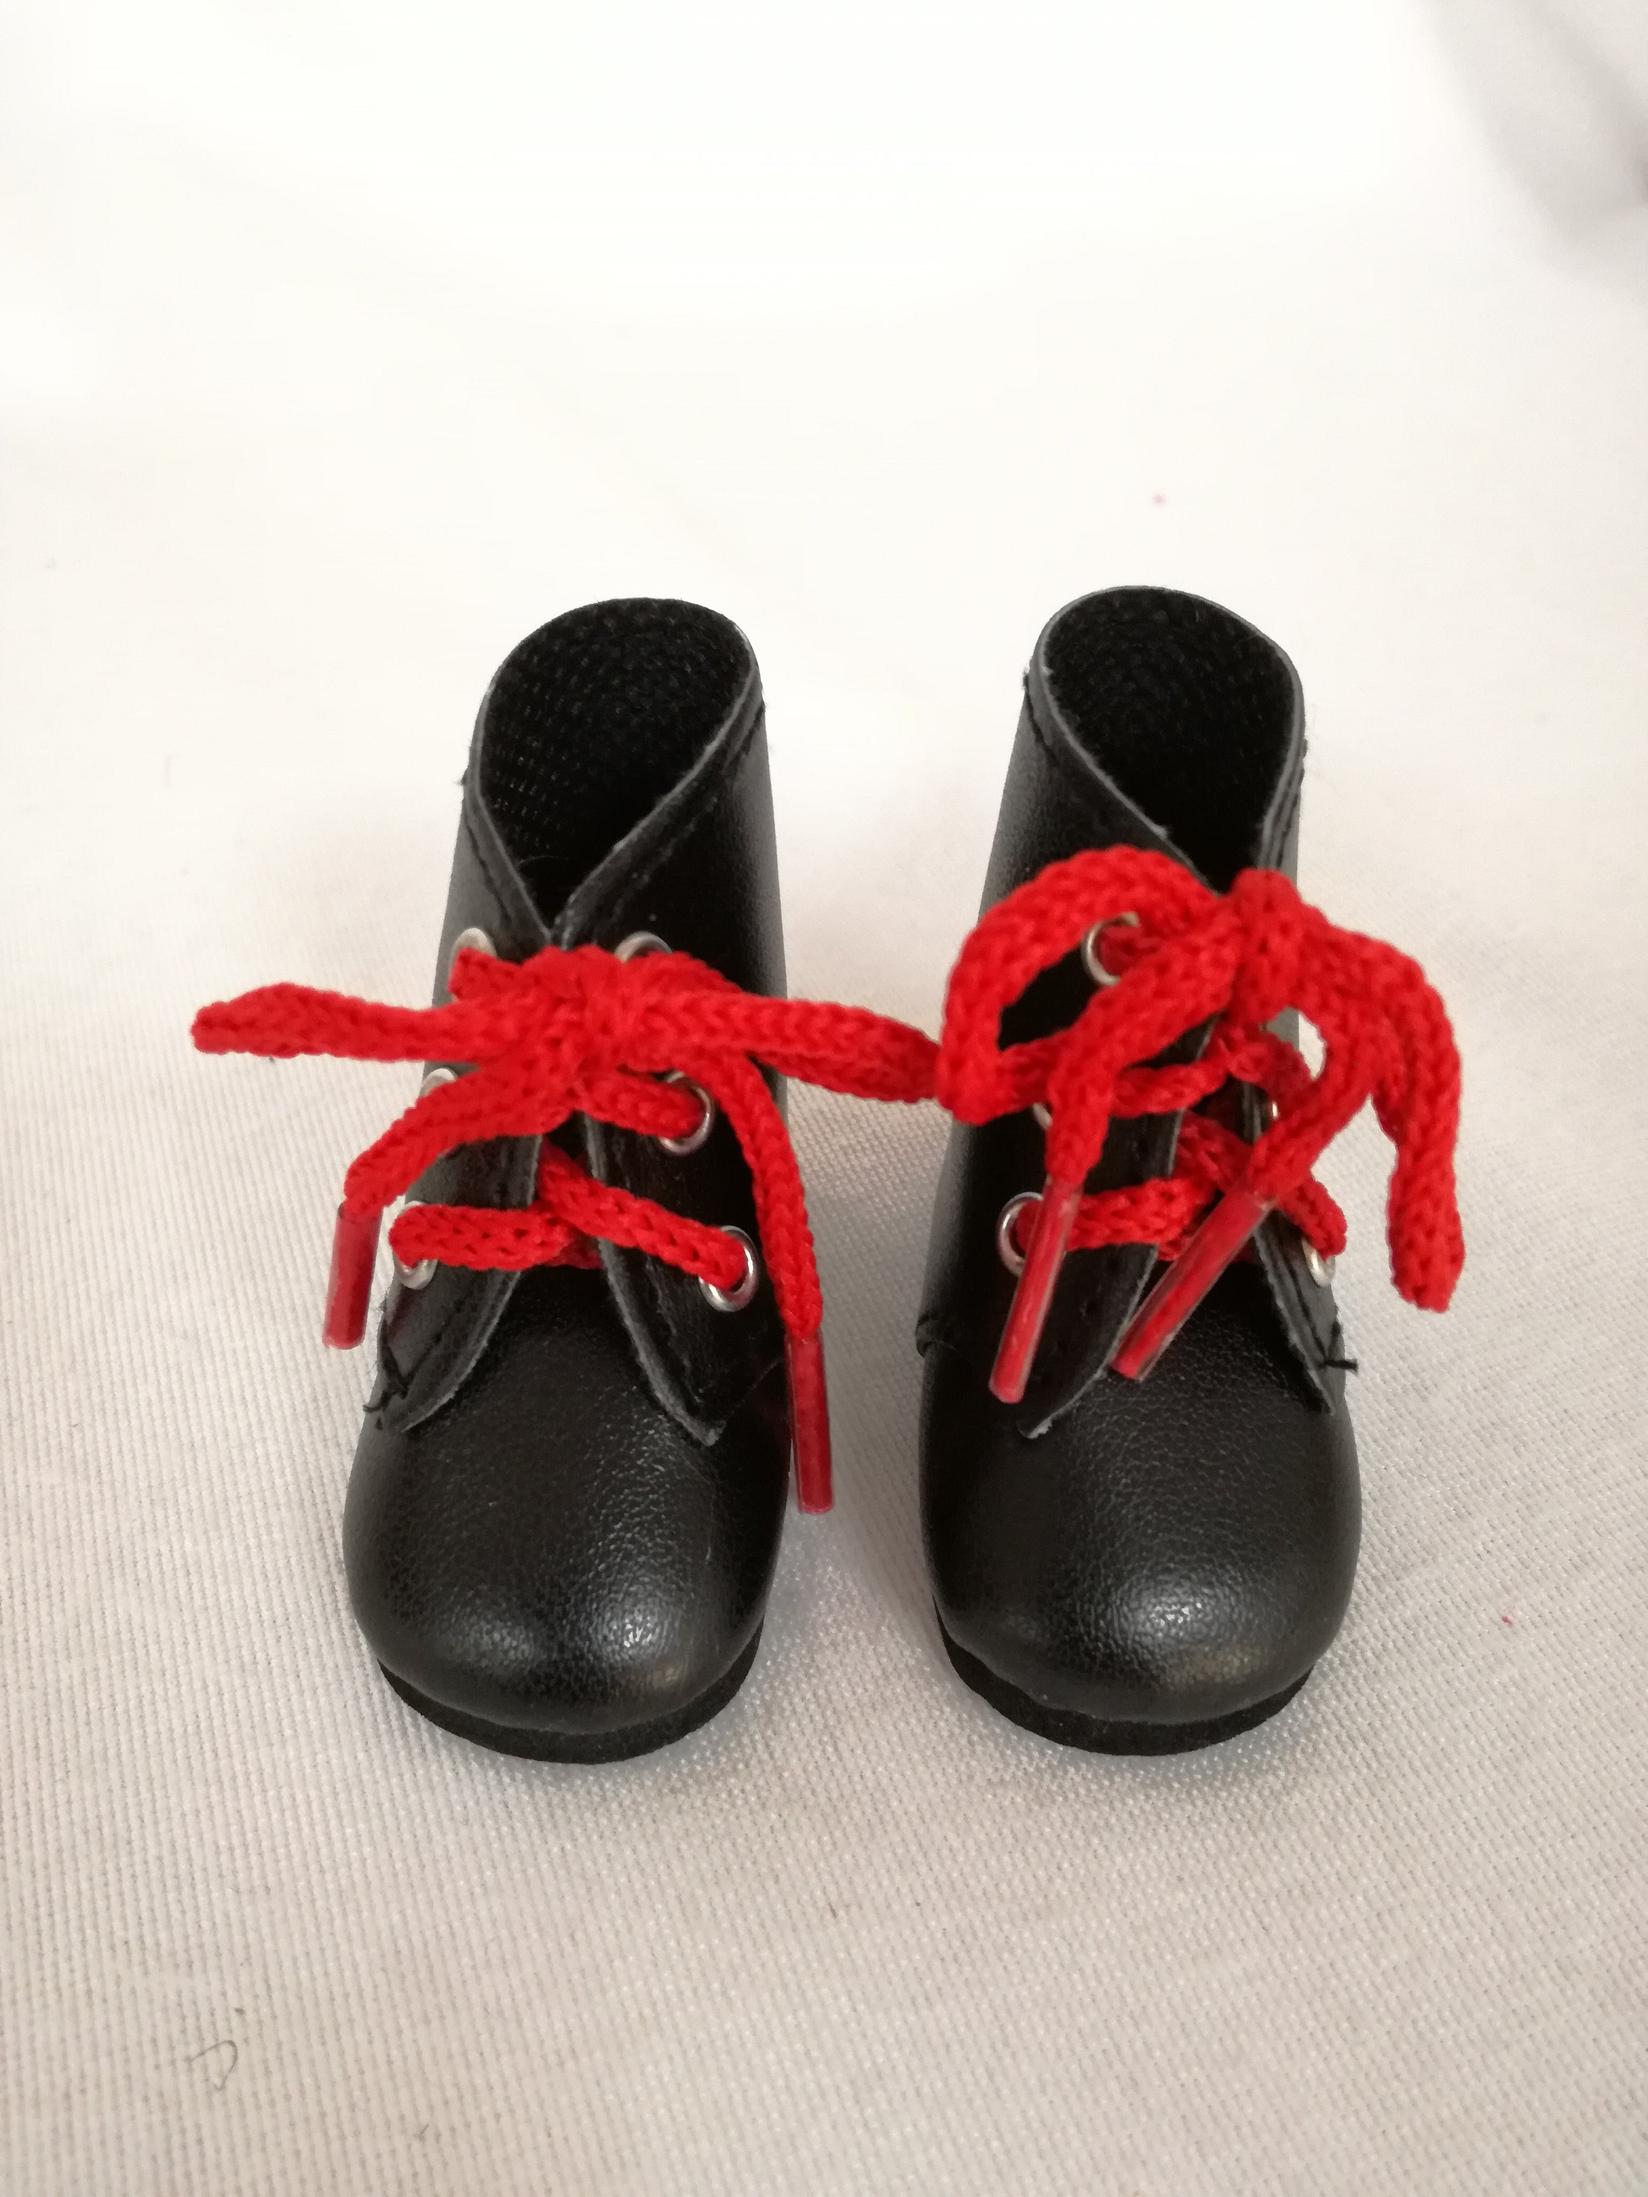 PAOLA REINA Duboke cipele za lutke od 32cm, Crne